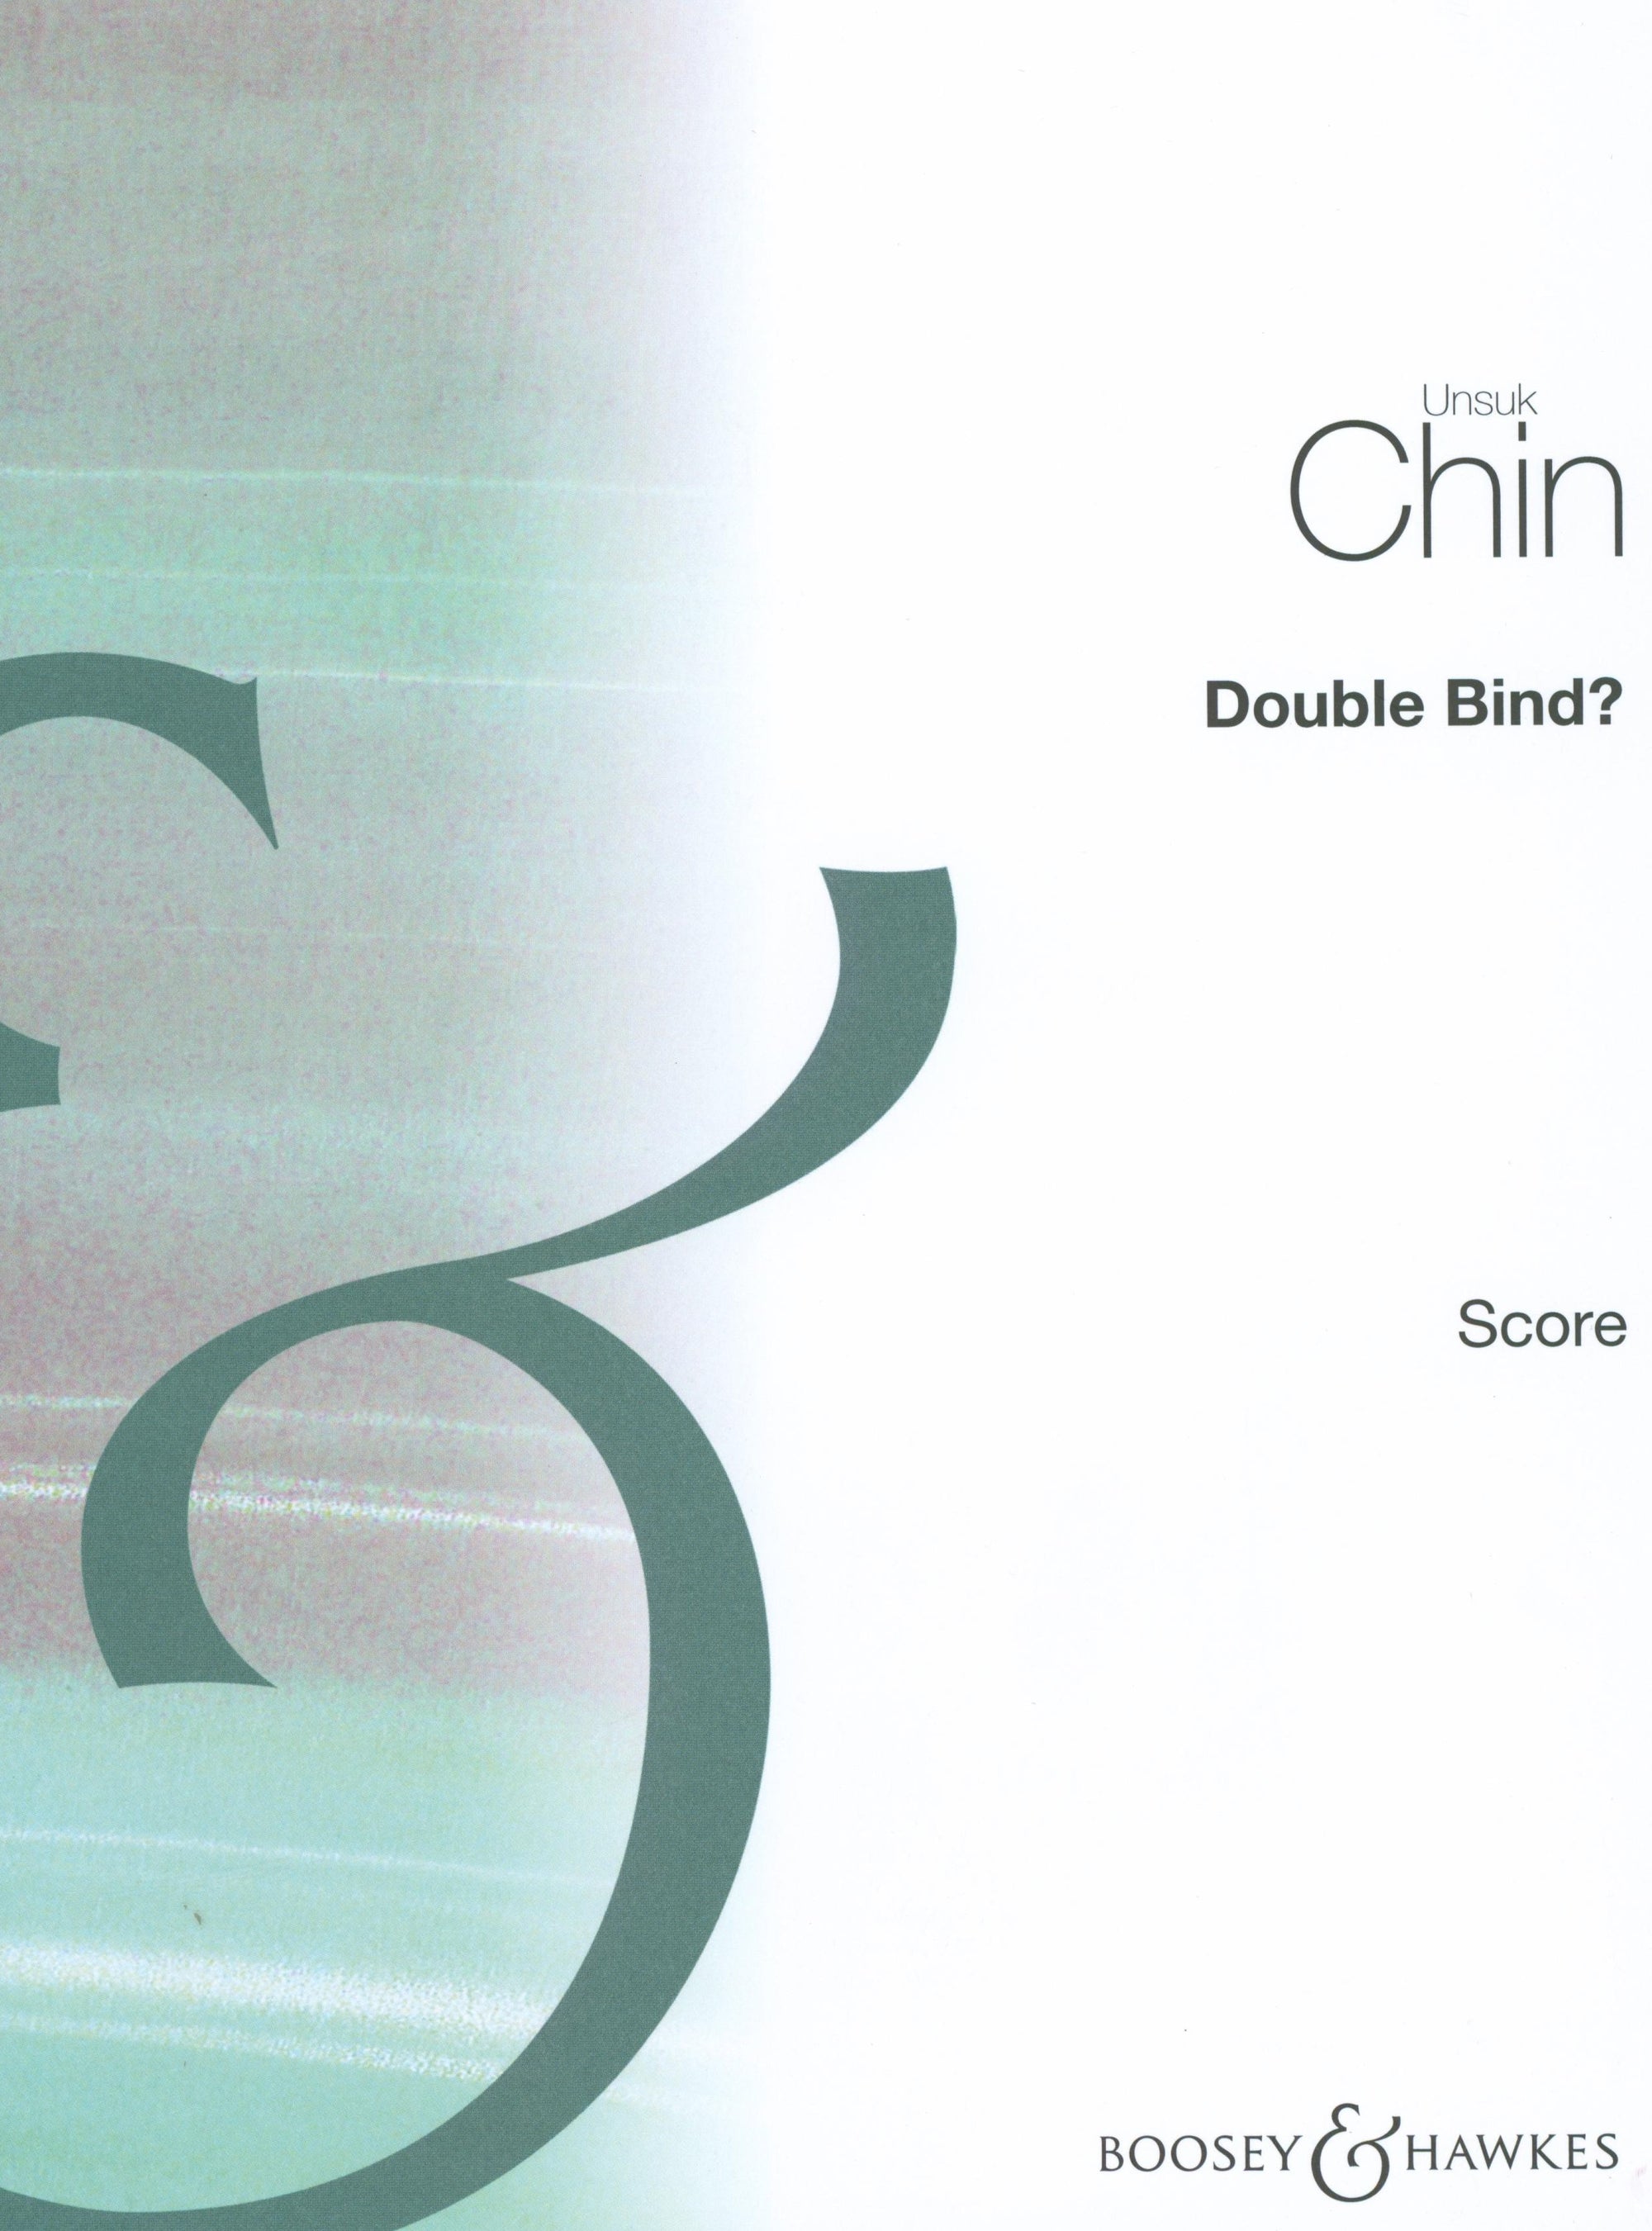 Chin: Double Bind?